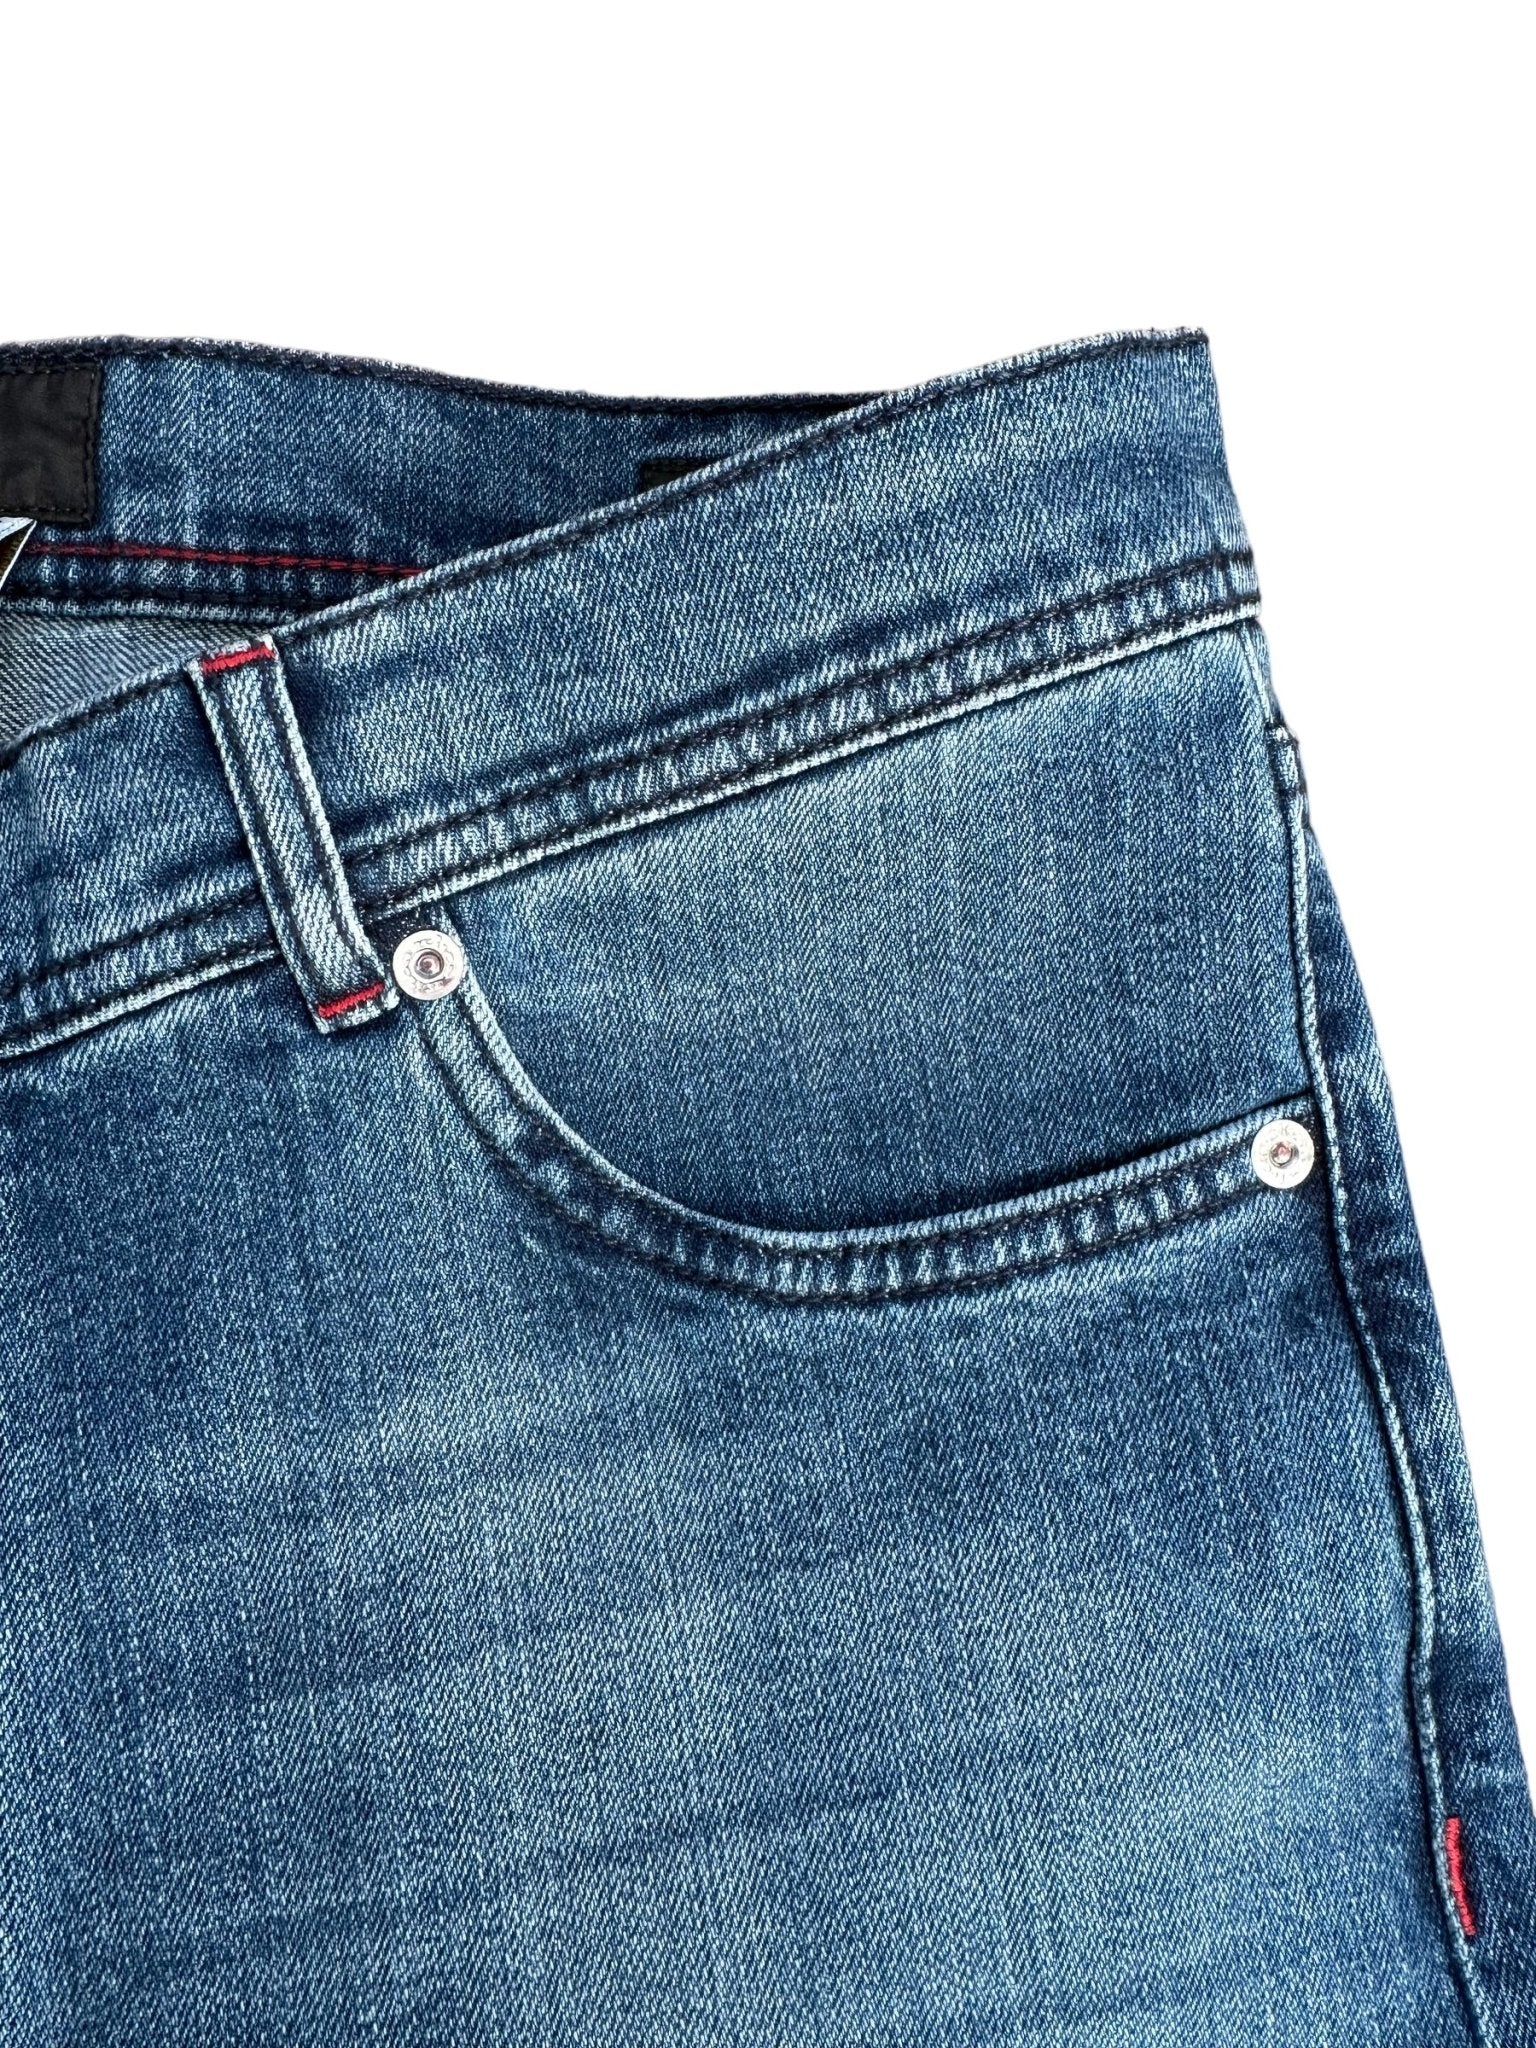 Kiton Jeans Slim - 24/7 Clothing